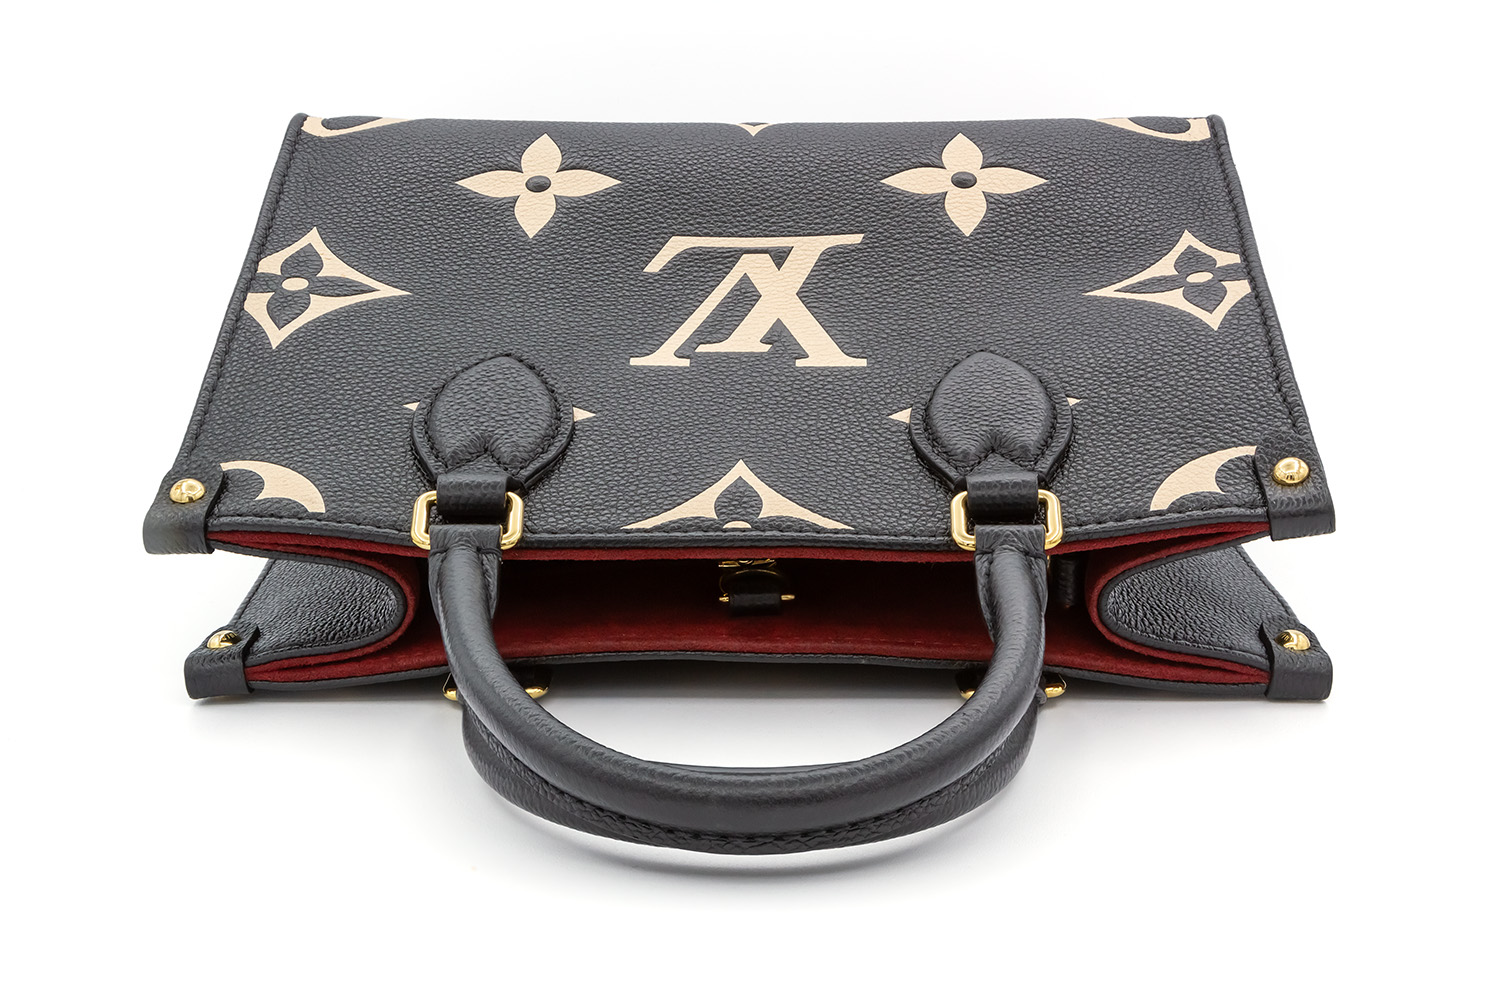 Louis Vuitton On The Go PM Monogram Empreinte Leather Handbag